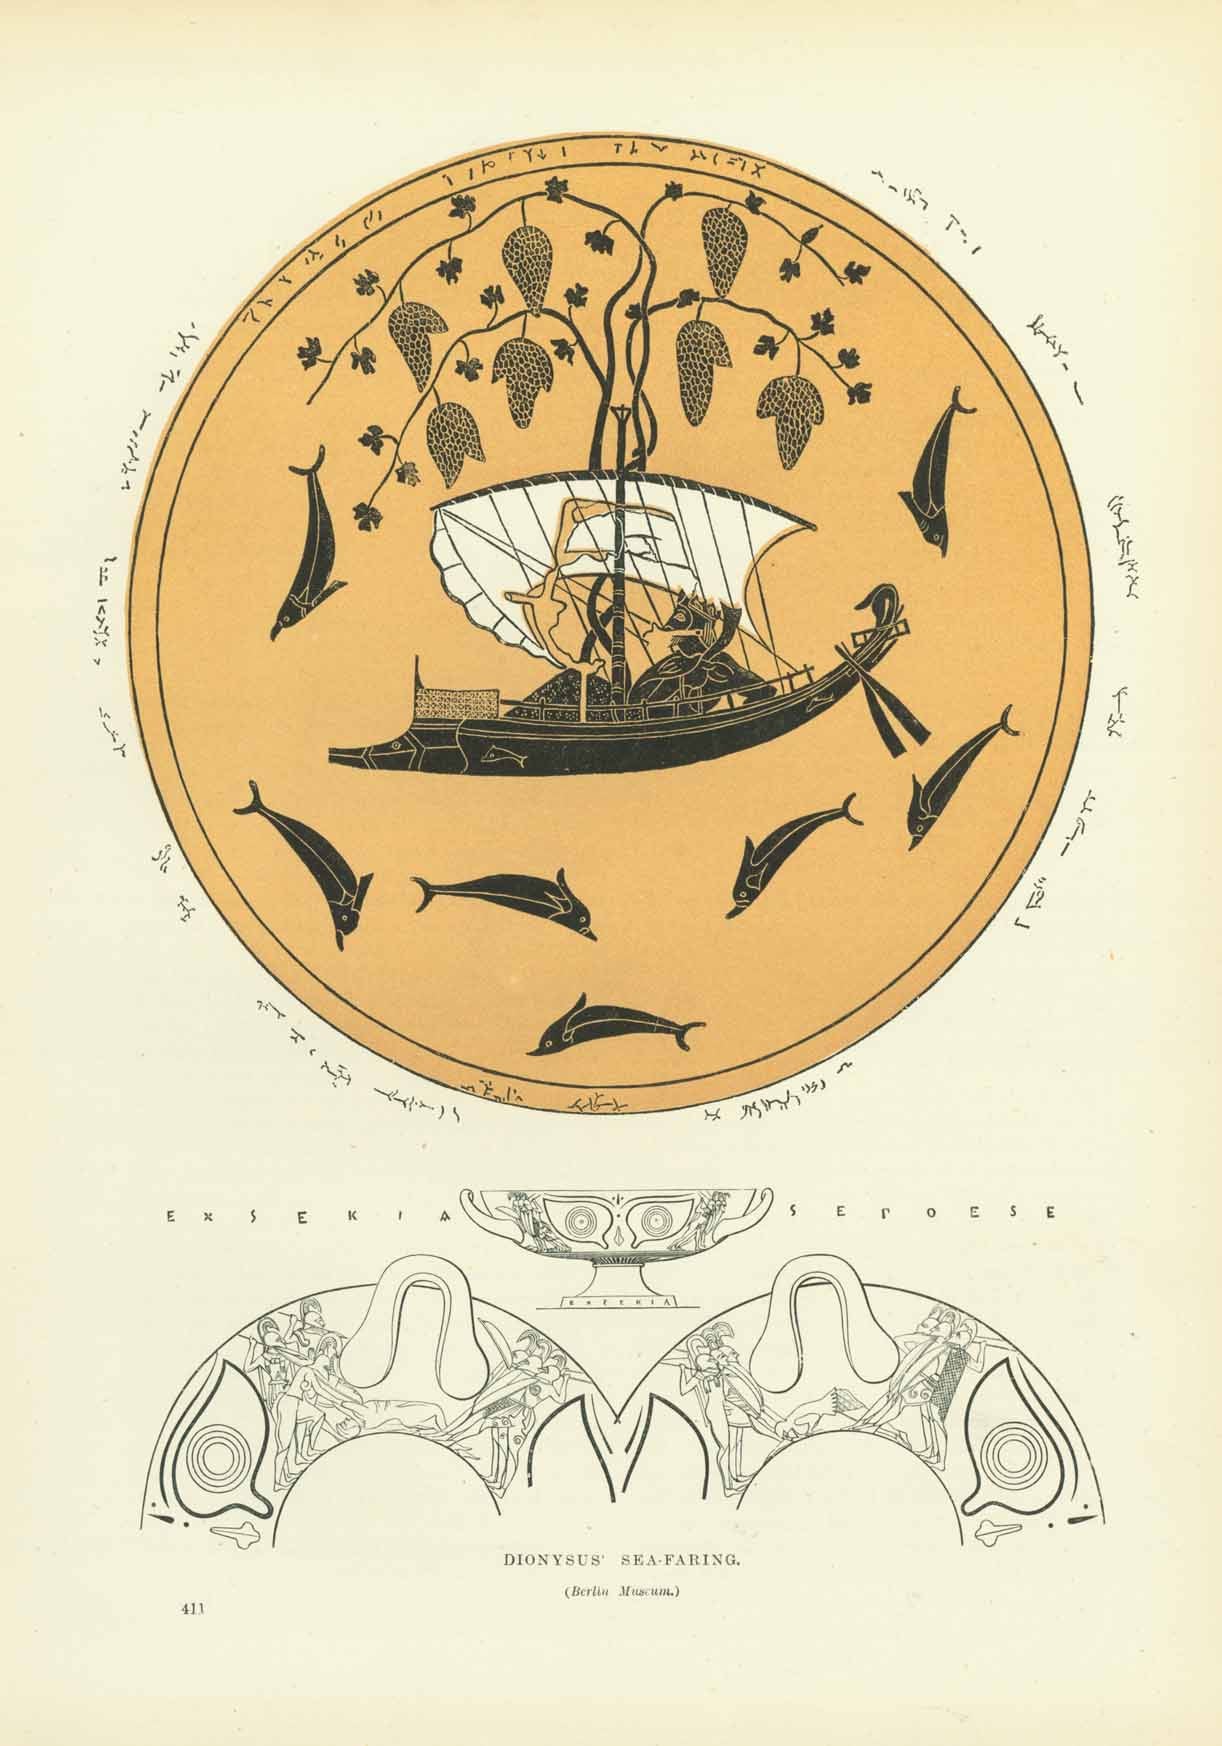 Mythology, "Dionysus Sea Faring"